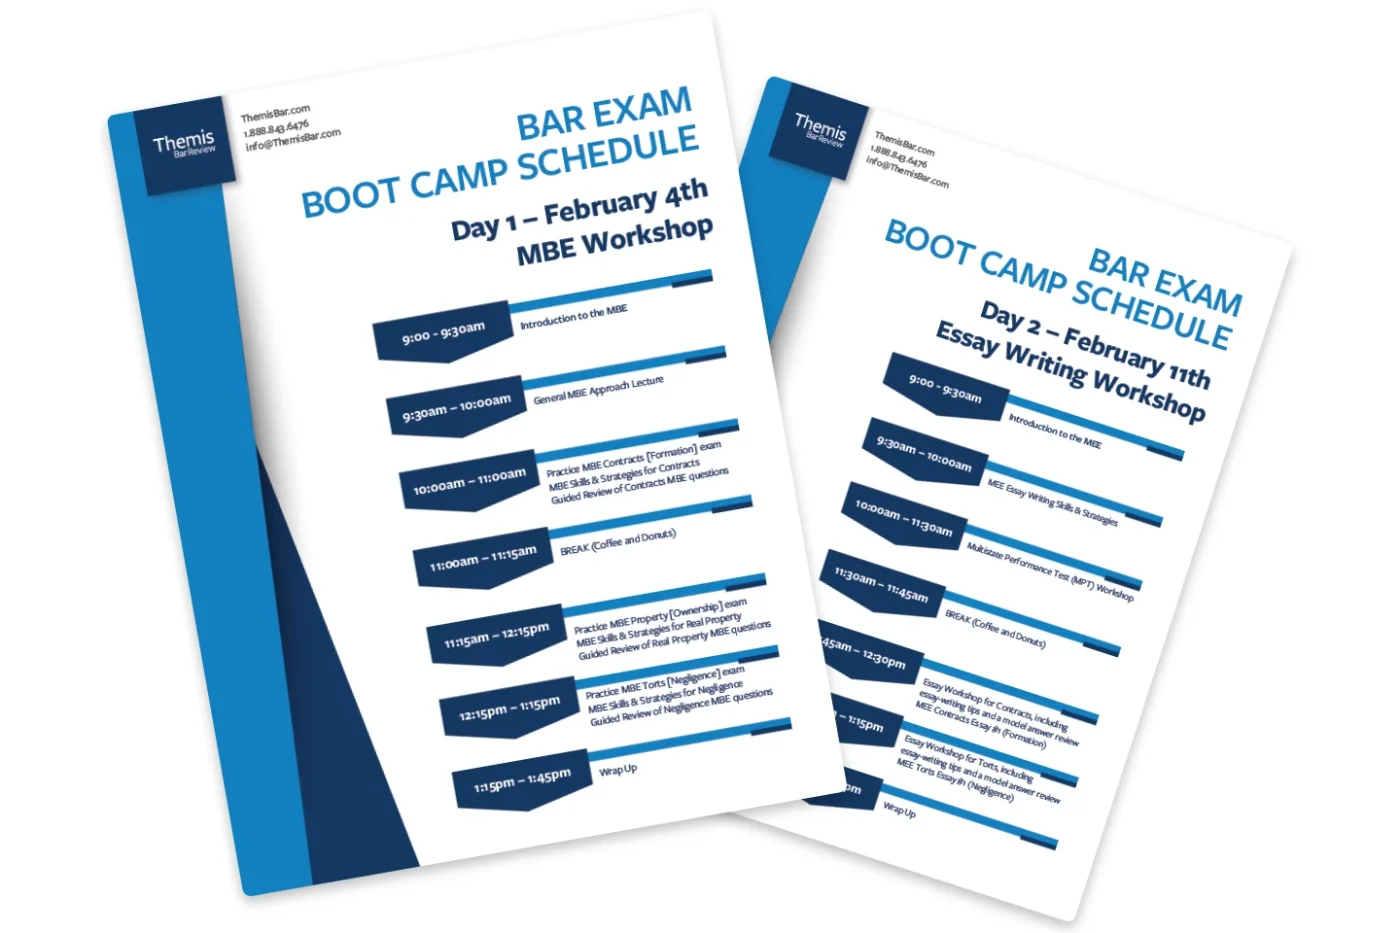 The Themis + UWorld Bar Exam Boot Camp Schedule.